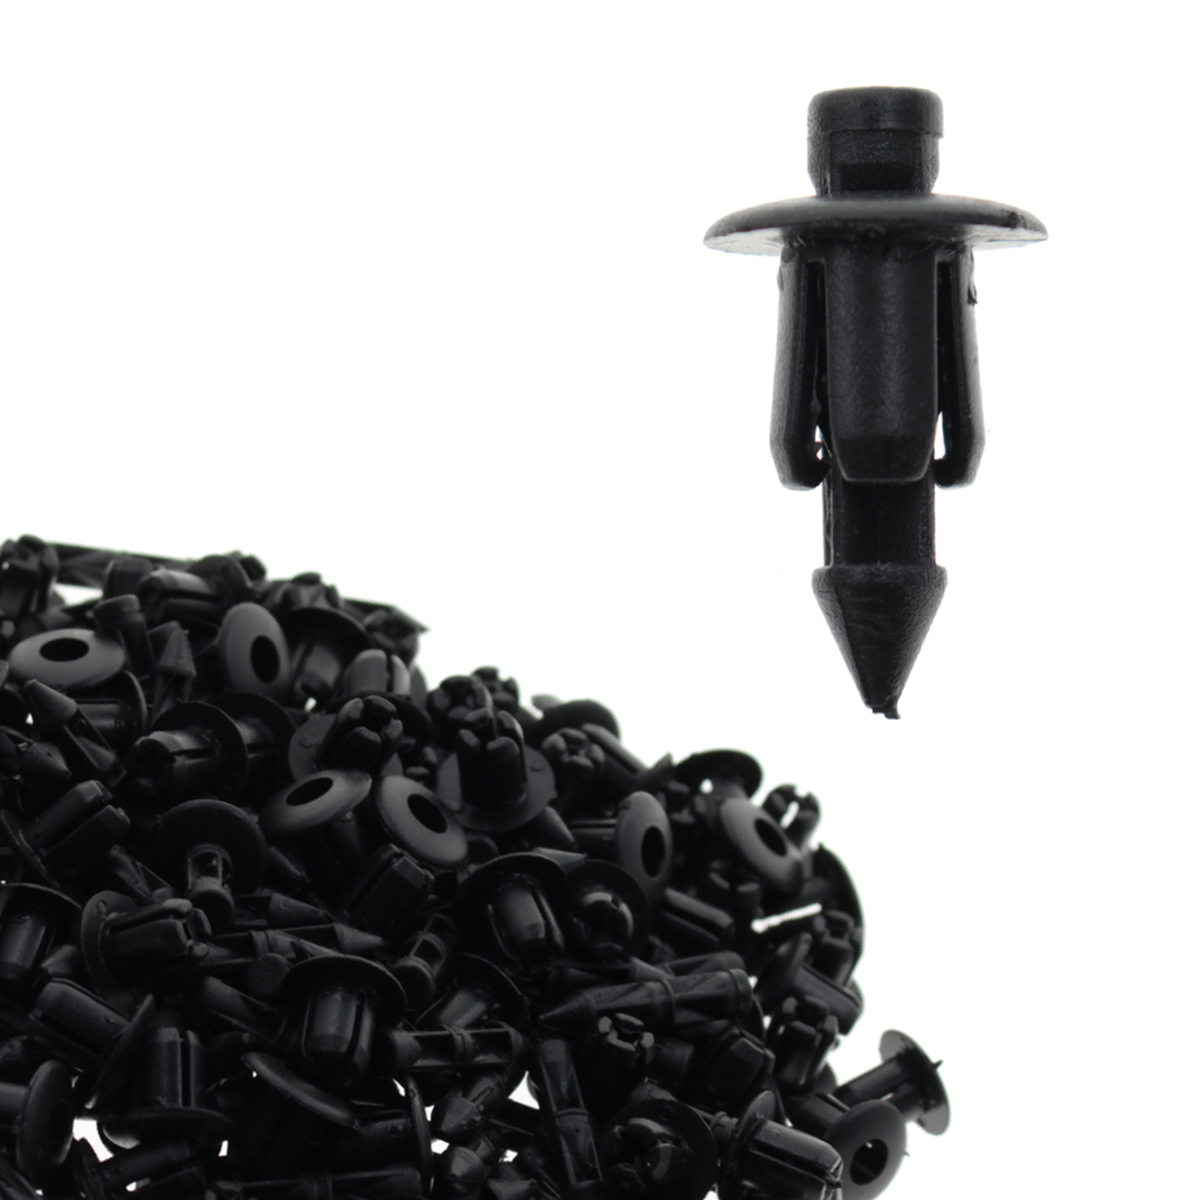 100 Pcs 6mm Hole Dia Black Plastic Push In Type Rivets Fastener Pin Clips Atv Ebay 